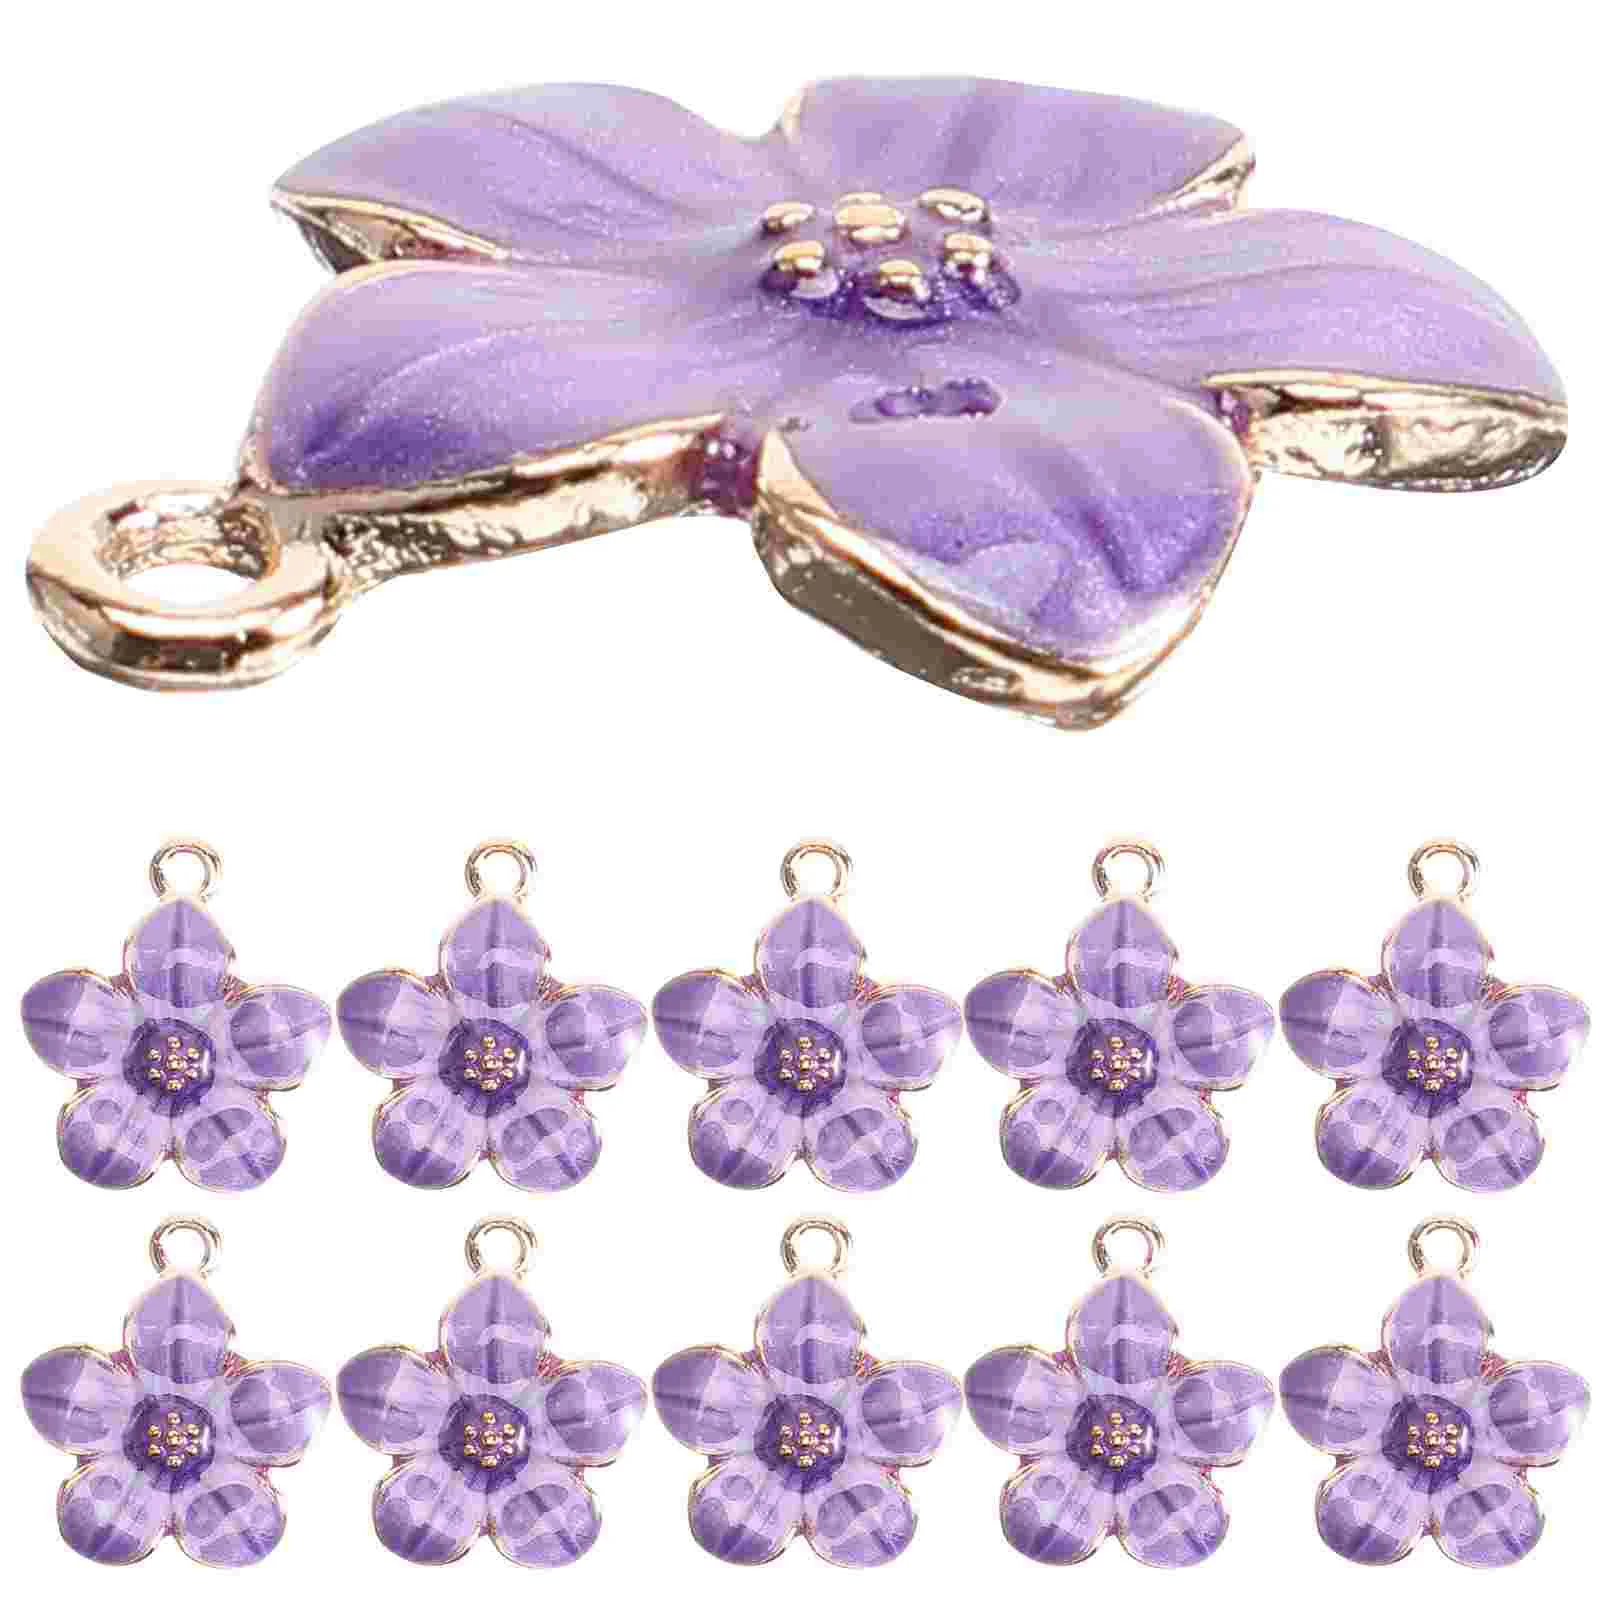 

50 Pcs Cherry Blossom Pendant Decorative Pendants Dainty Jewelry Alloy Charms Making Decorations Flower Crafts Mini